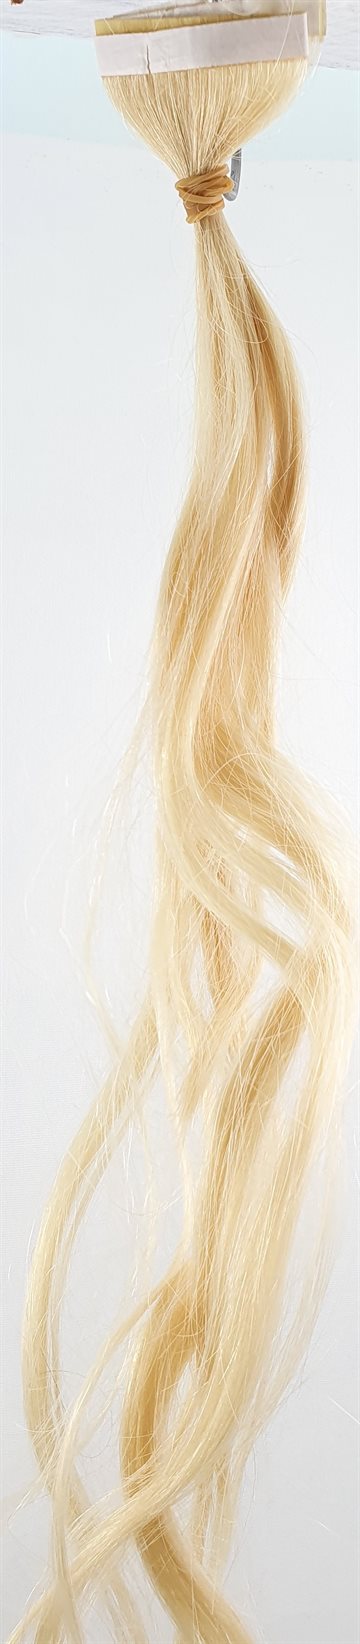 Human Hair - Skin Weft hair, color 613 Blonde 18" (45 cm. length)